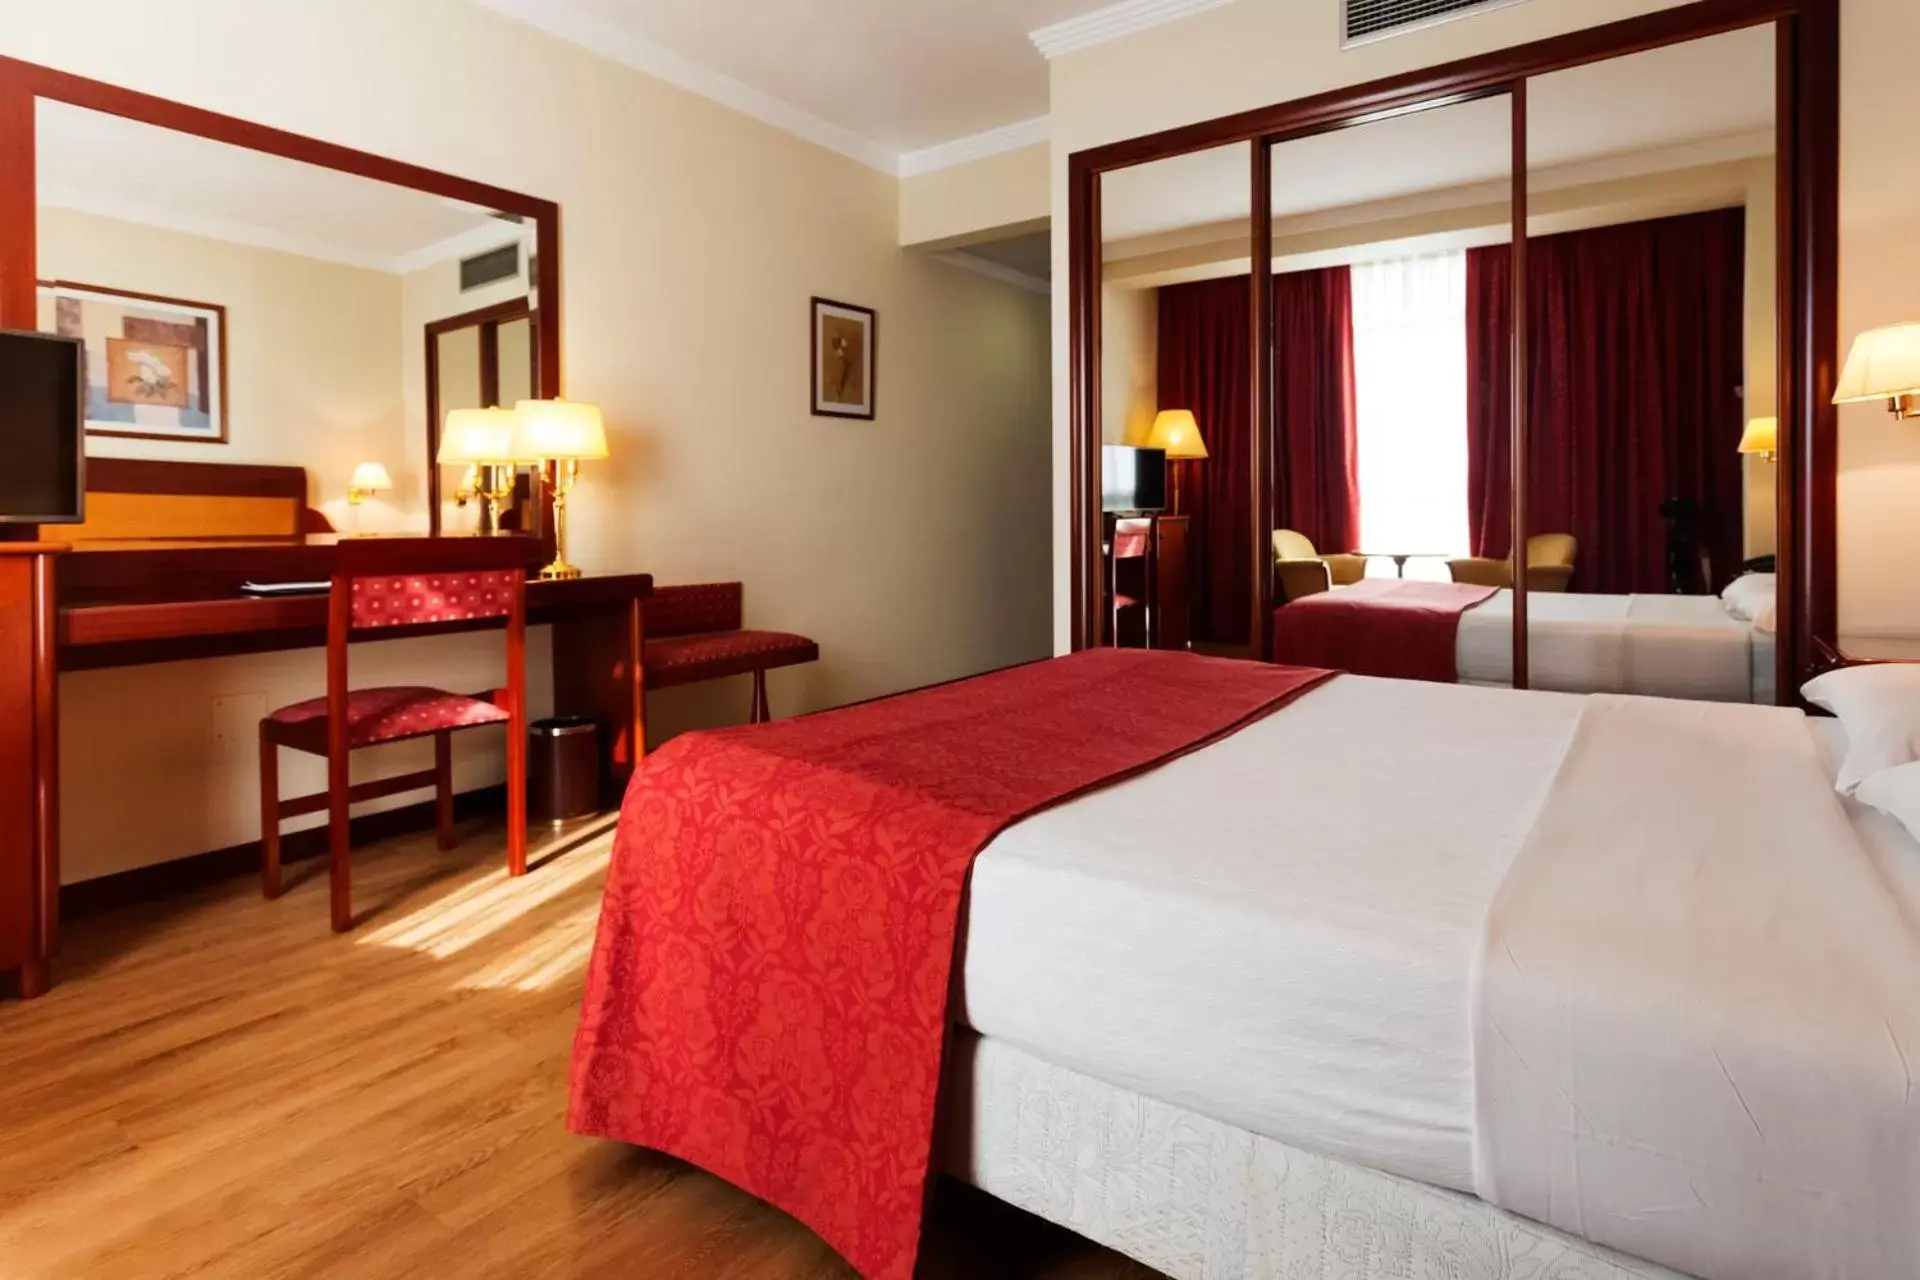 Bed in Gran Hotel de Ferrol